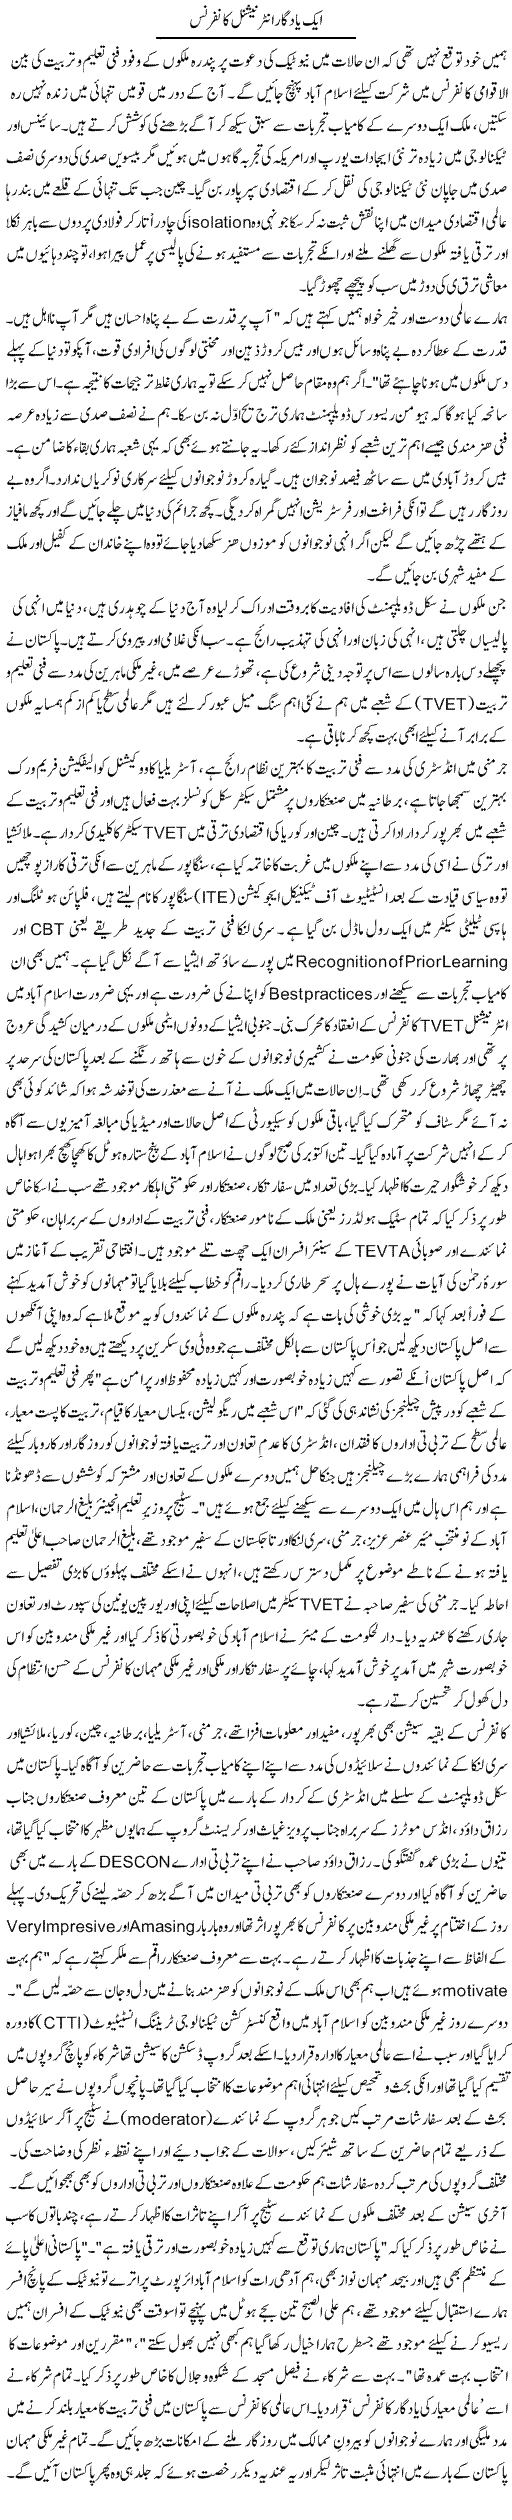 Aik Yaadgar International Conference | Zulfiqar Ahmed Cheema | Daily Urdu Columns